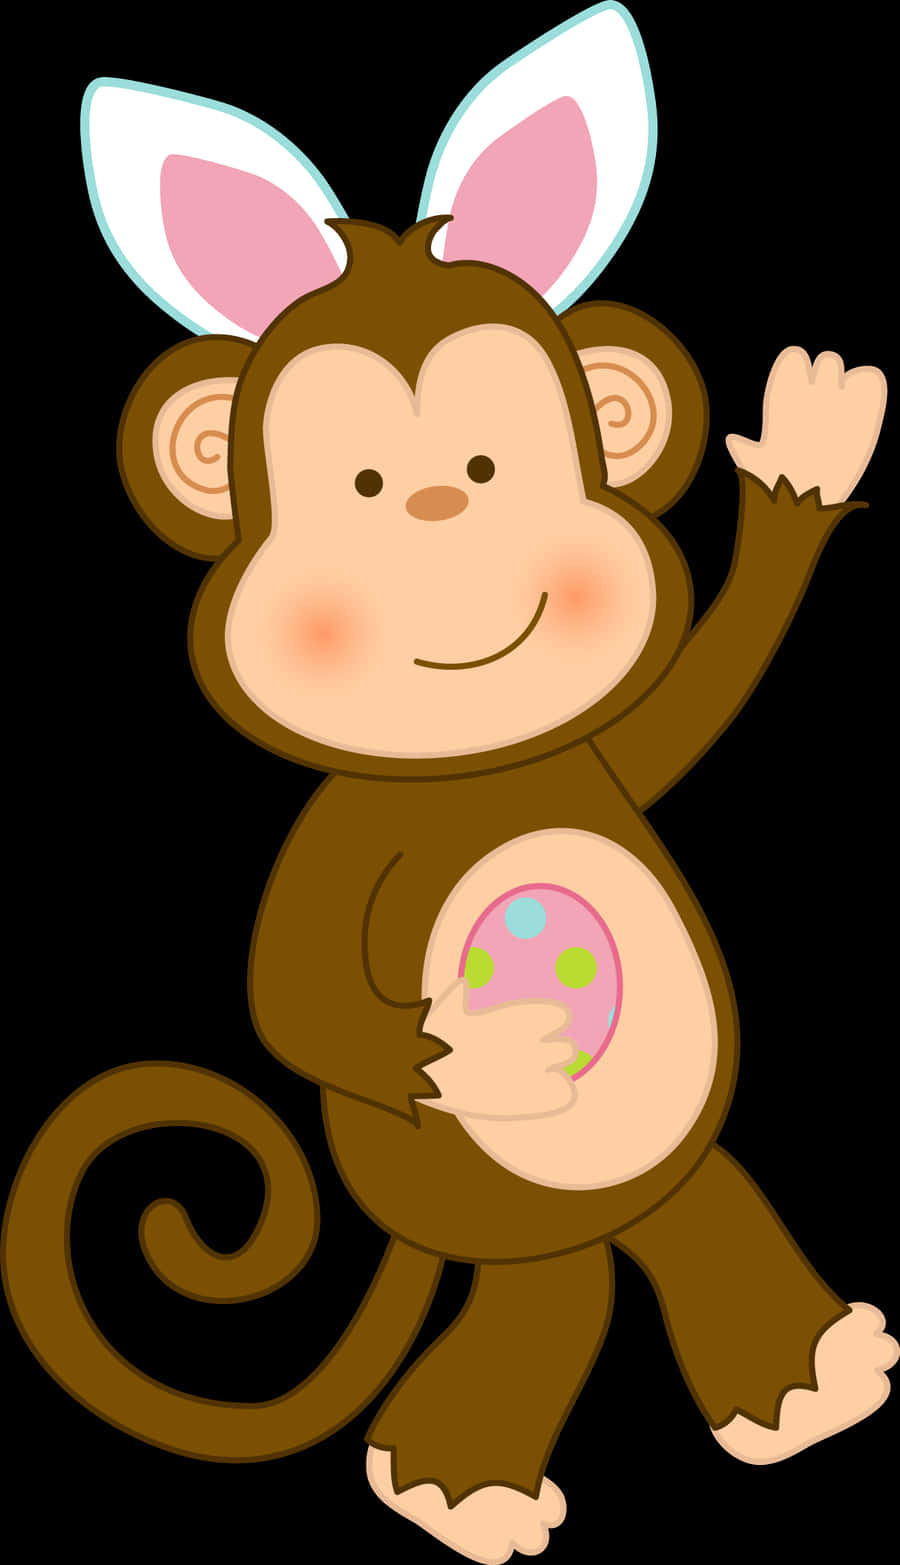 Cartoon Monkey With Egg Illustration PNG